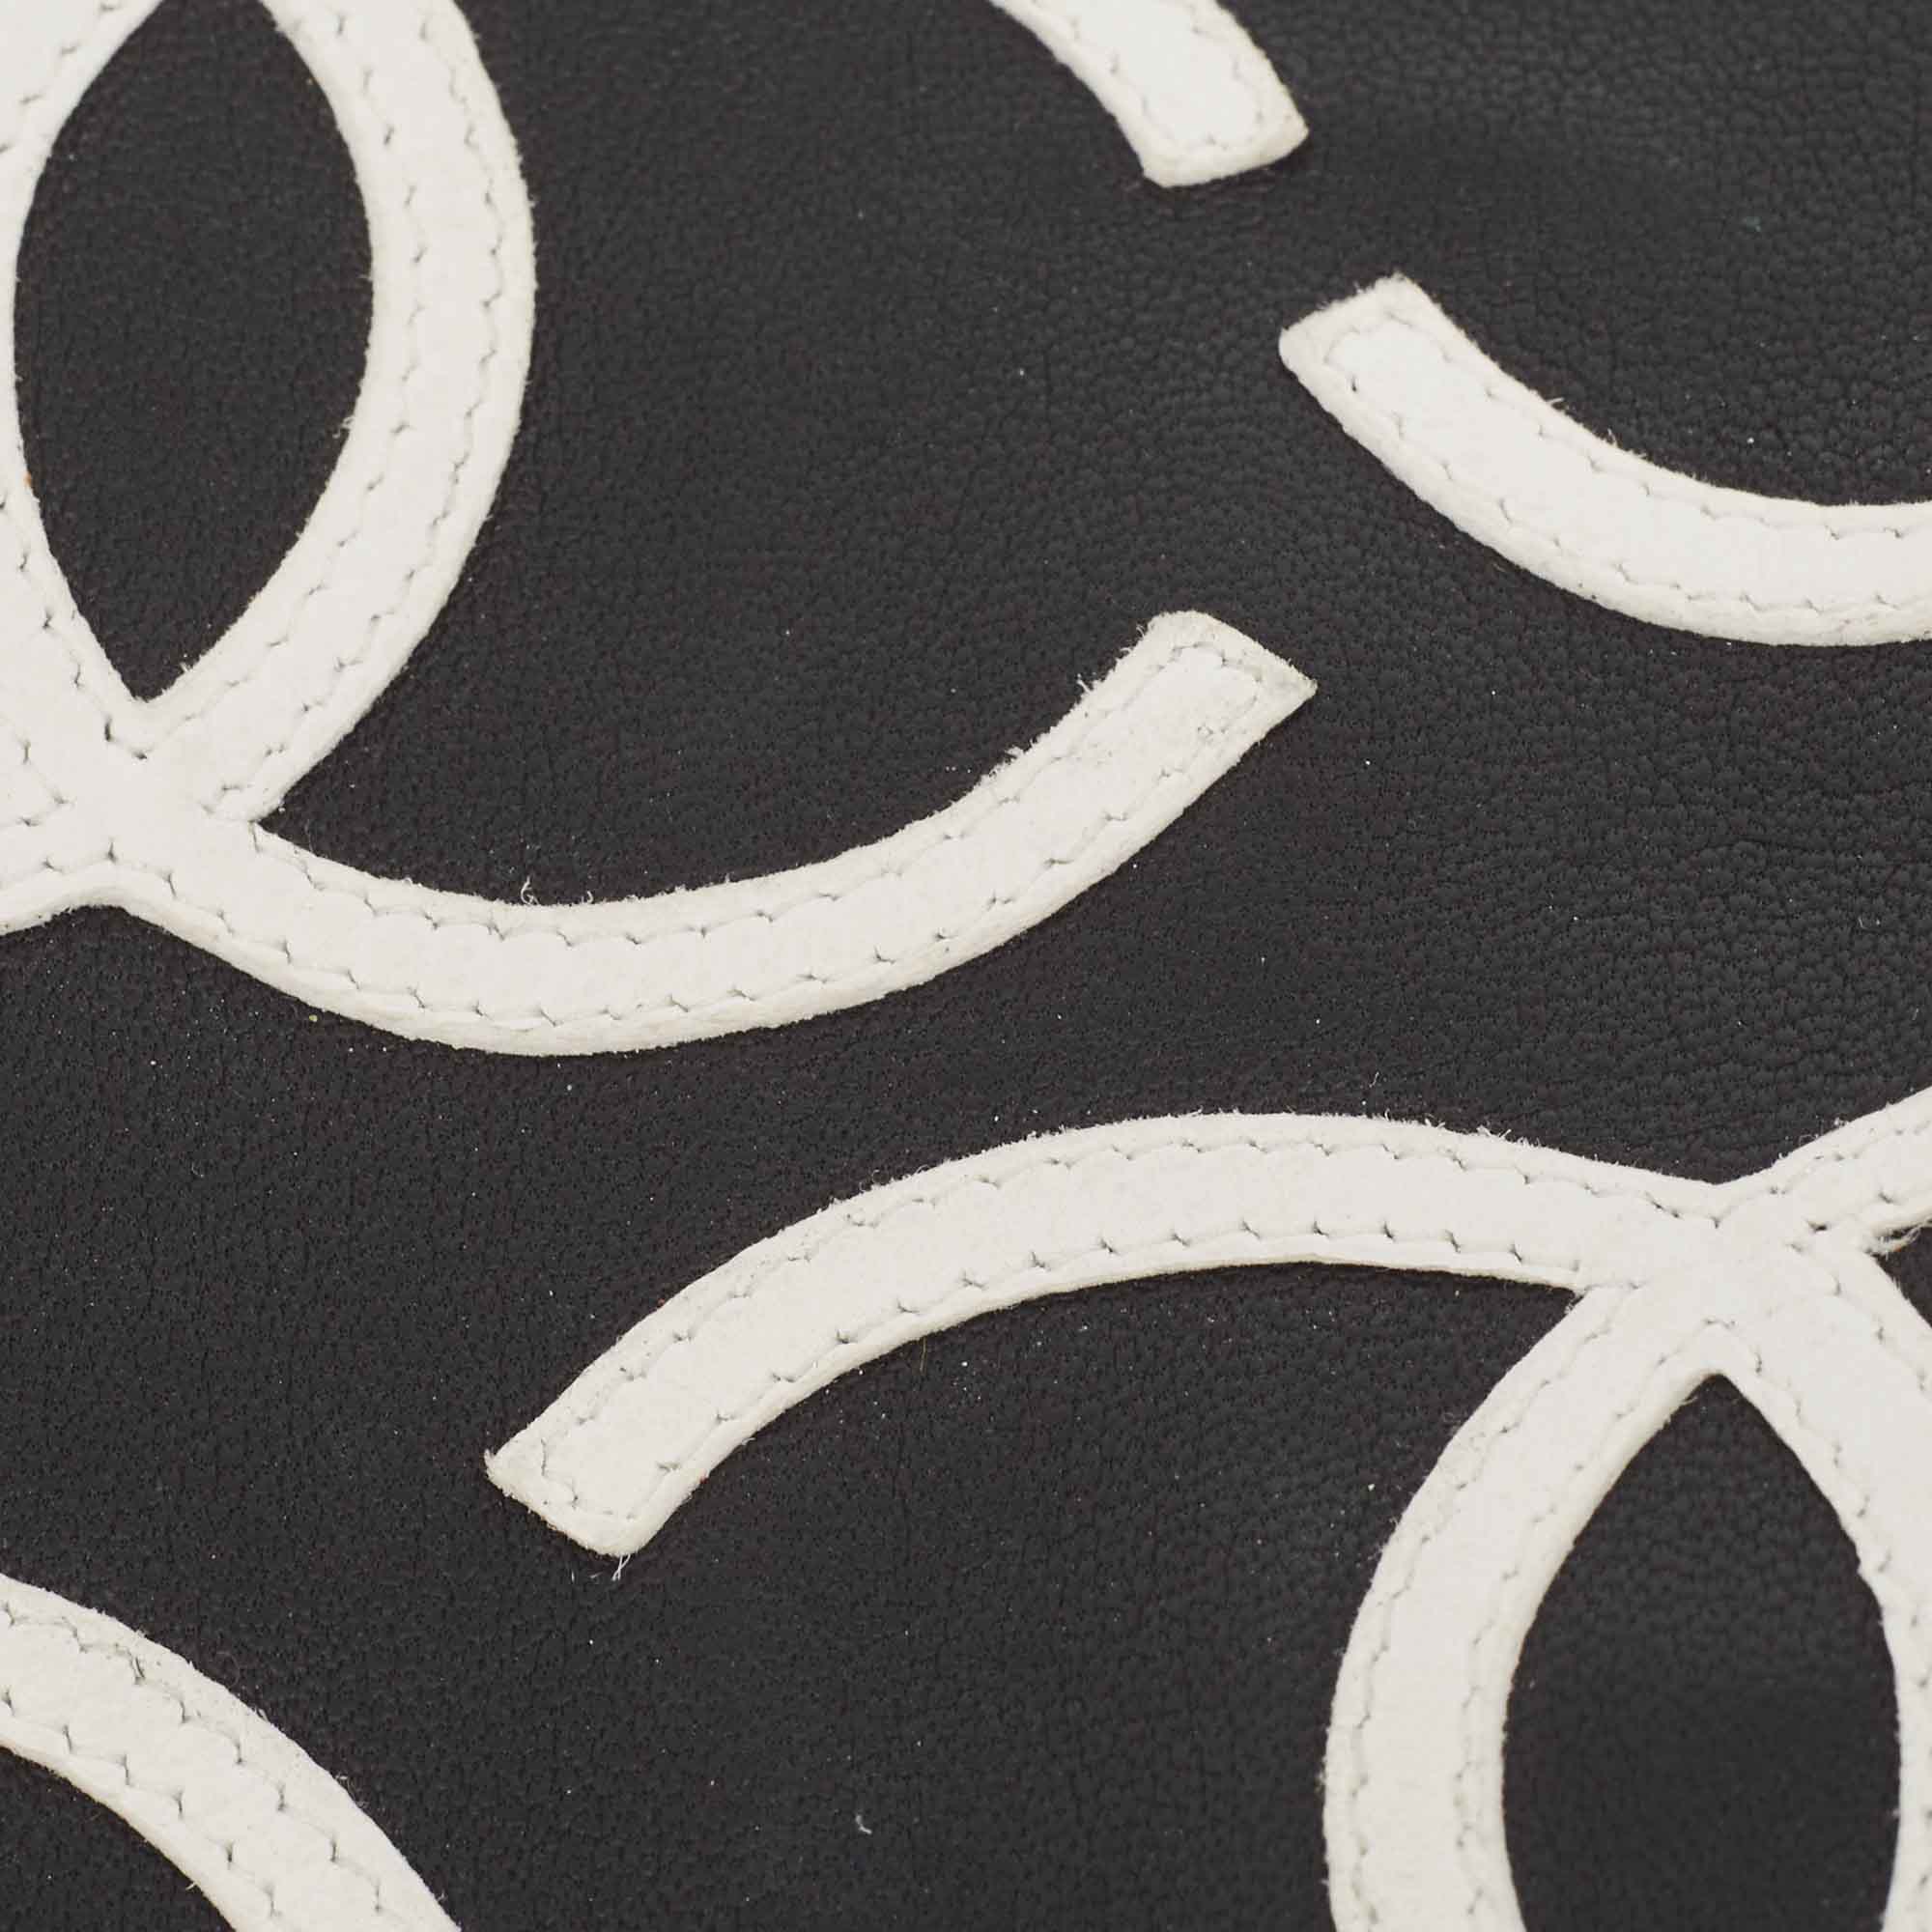 

Chanel Black CC Appliqued Leather Fingerless Gloves Size